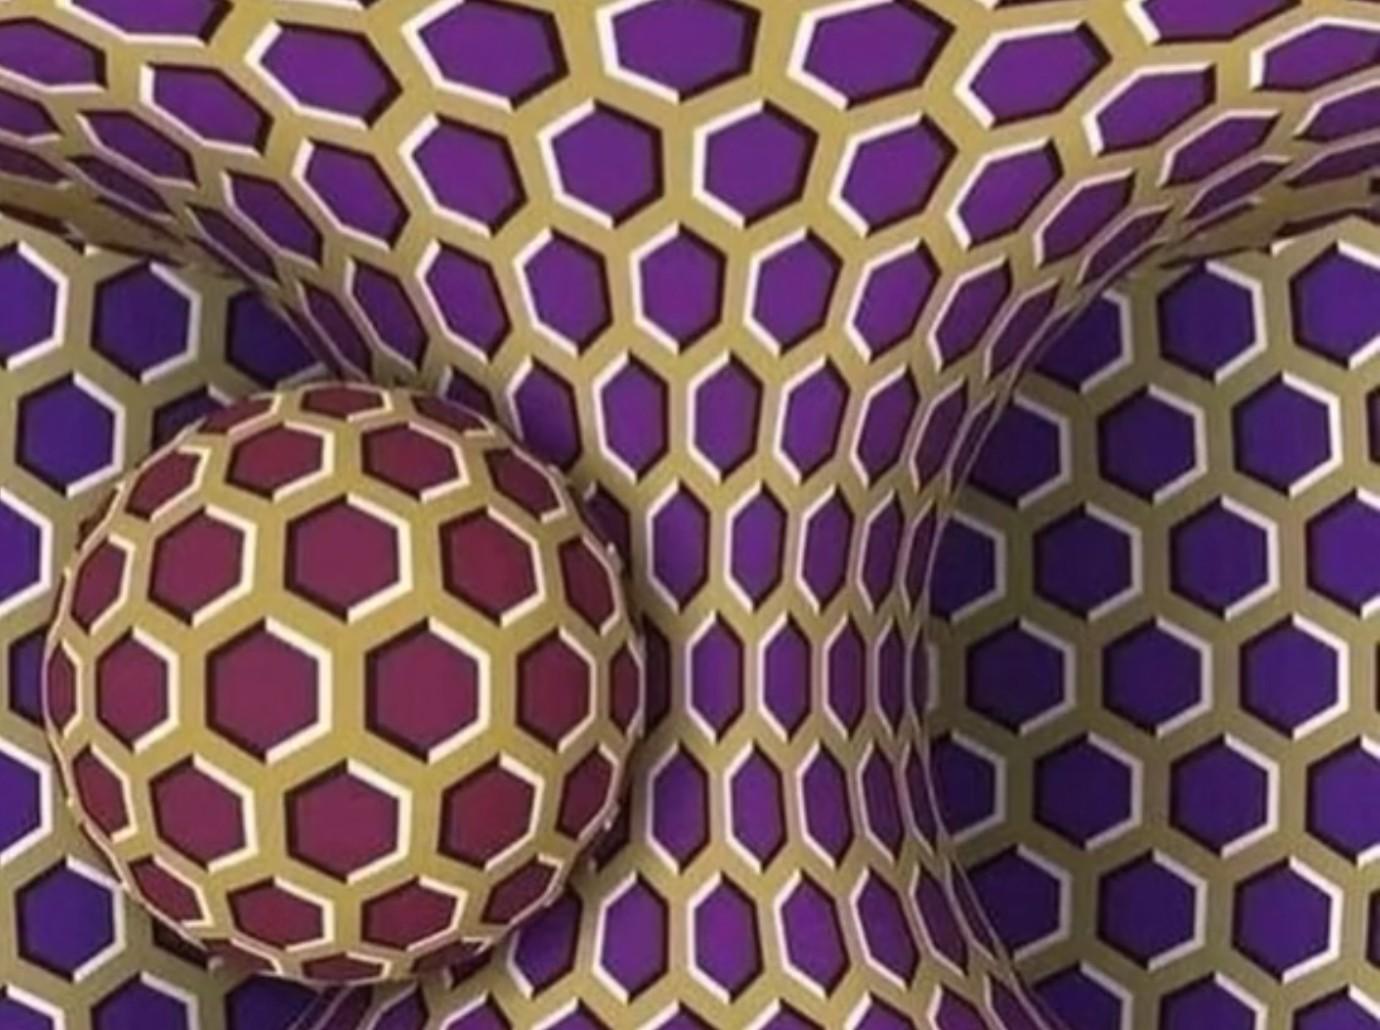 Shell-shocked brains exhibit honeycomb-shaped damage, Science